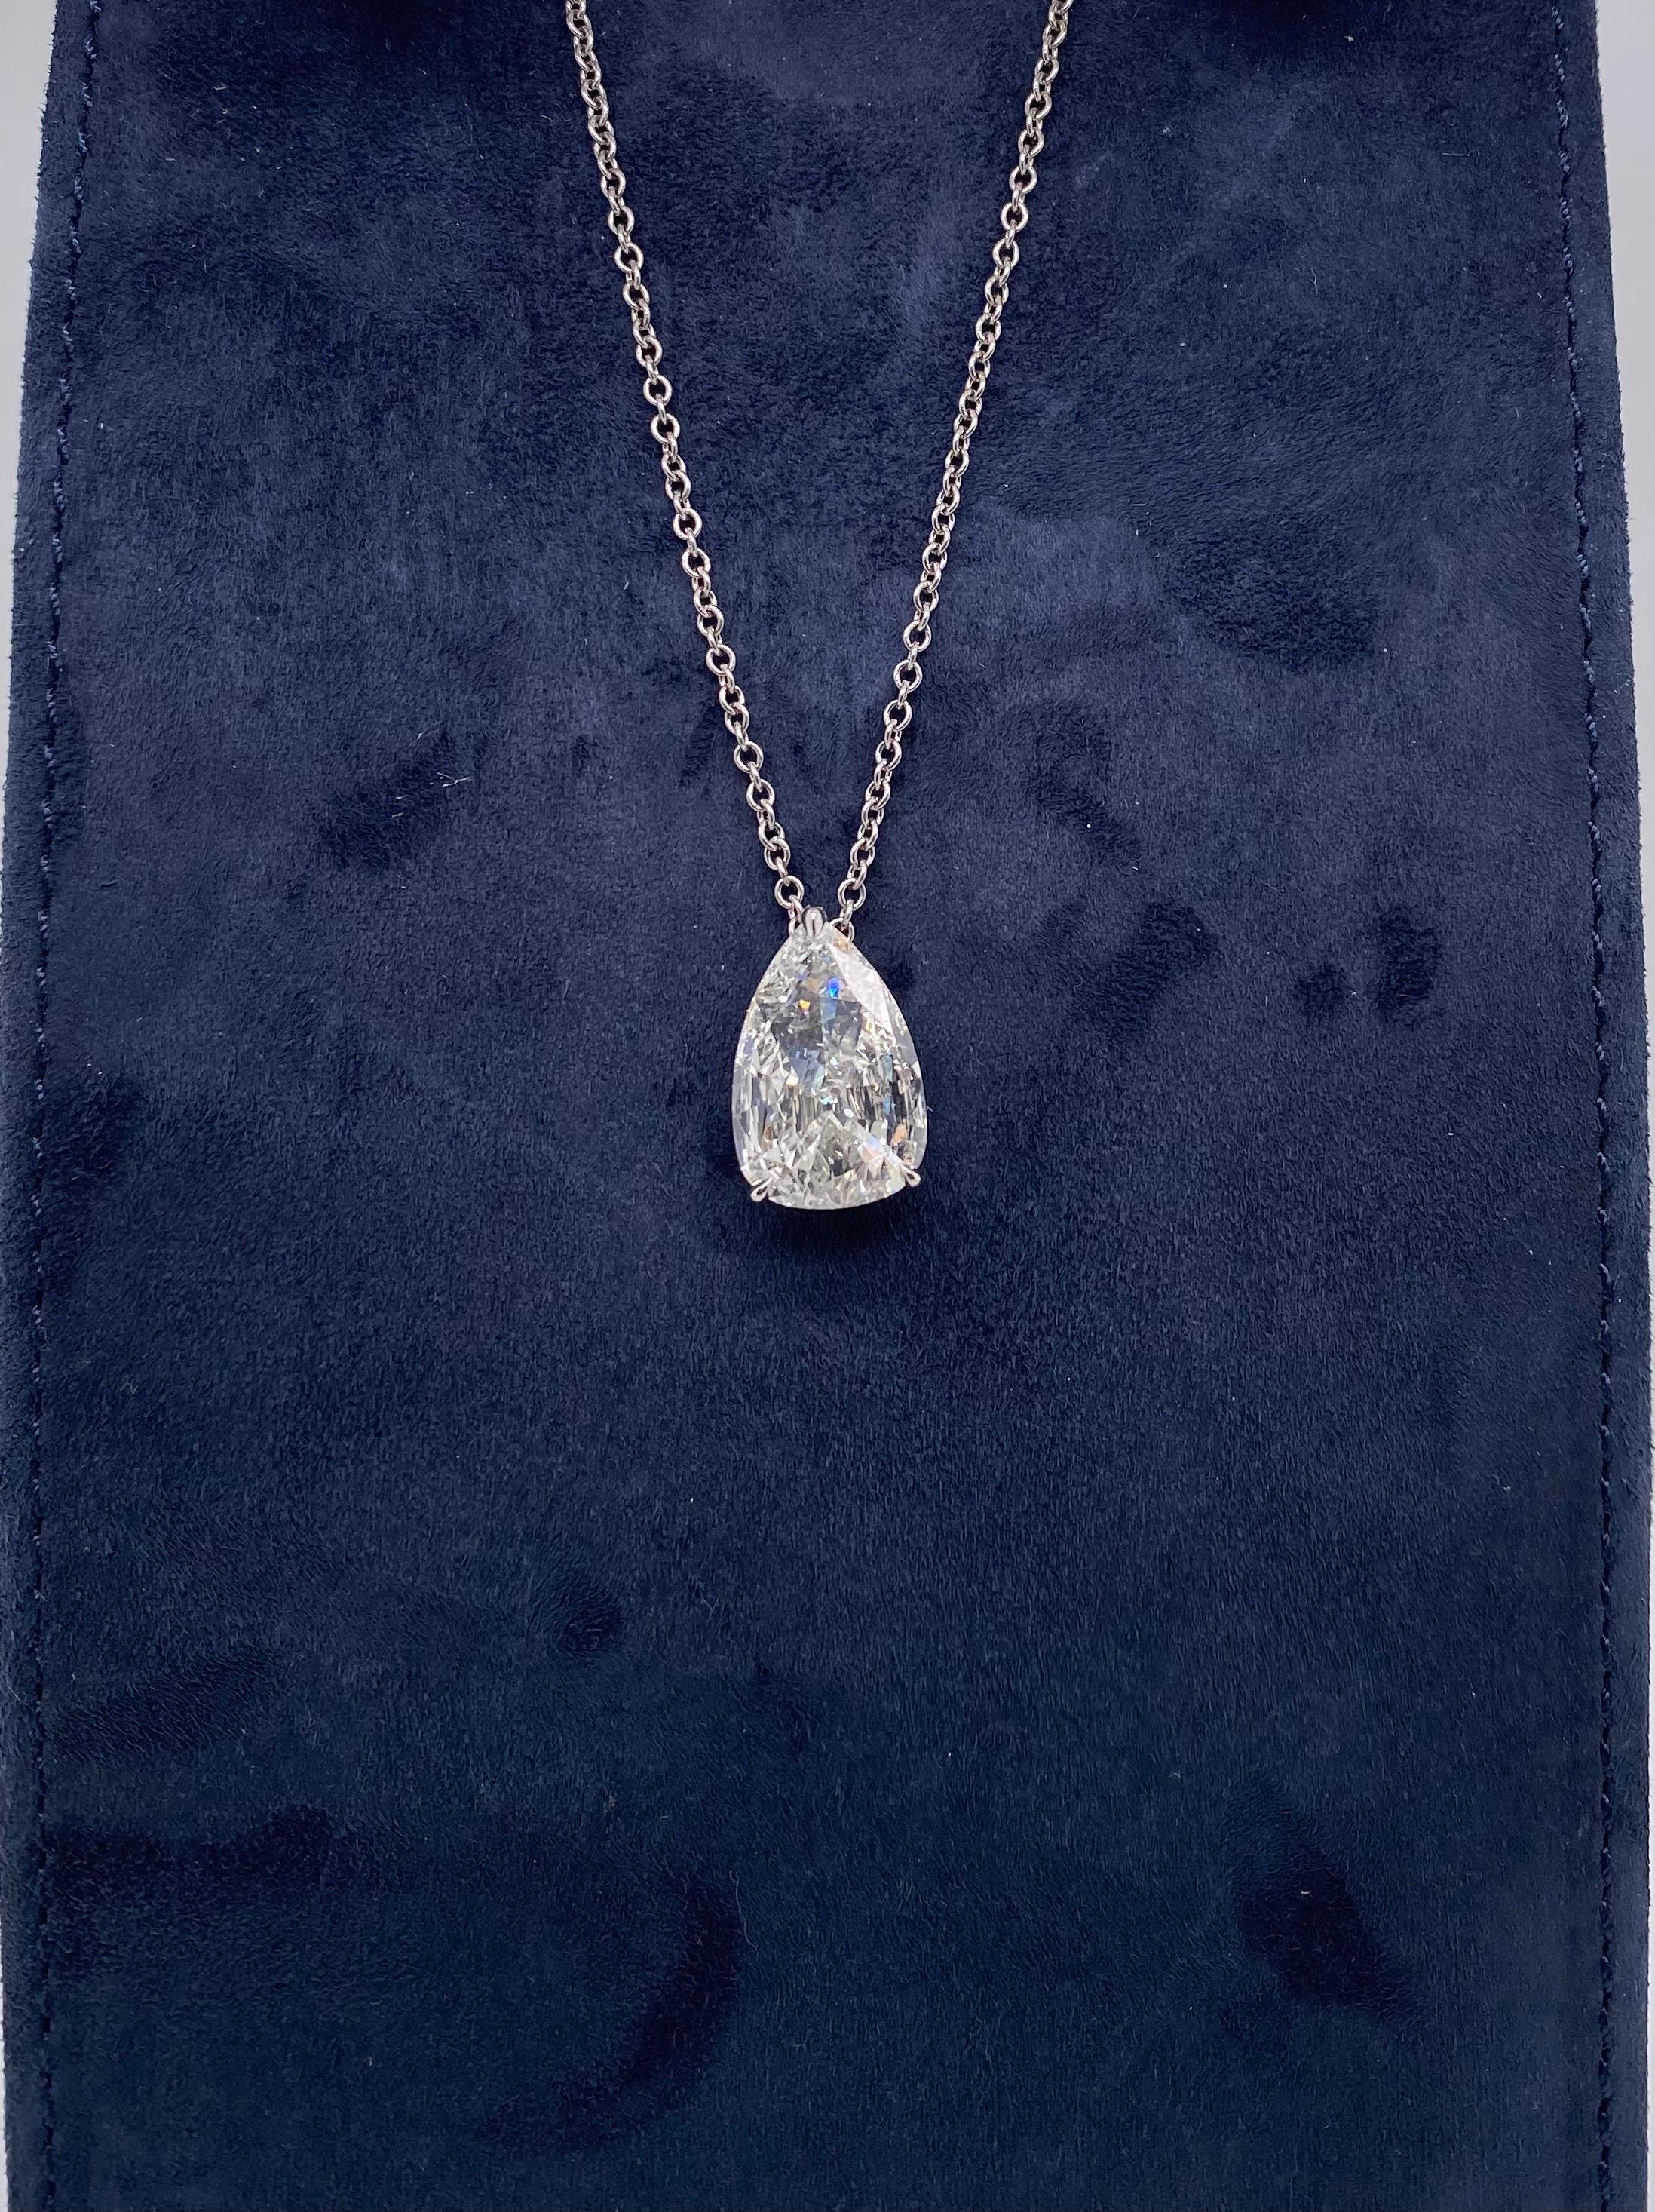 Pear Cut Issac Nussbaum GIA Certified 3.82 Carat Pear Shape Diamond Pendant Necklace For Sale